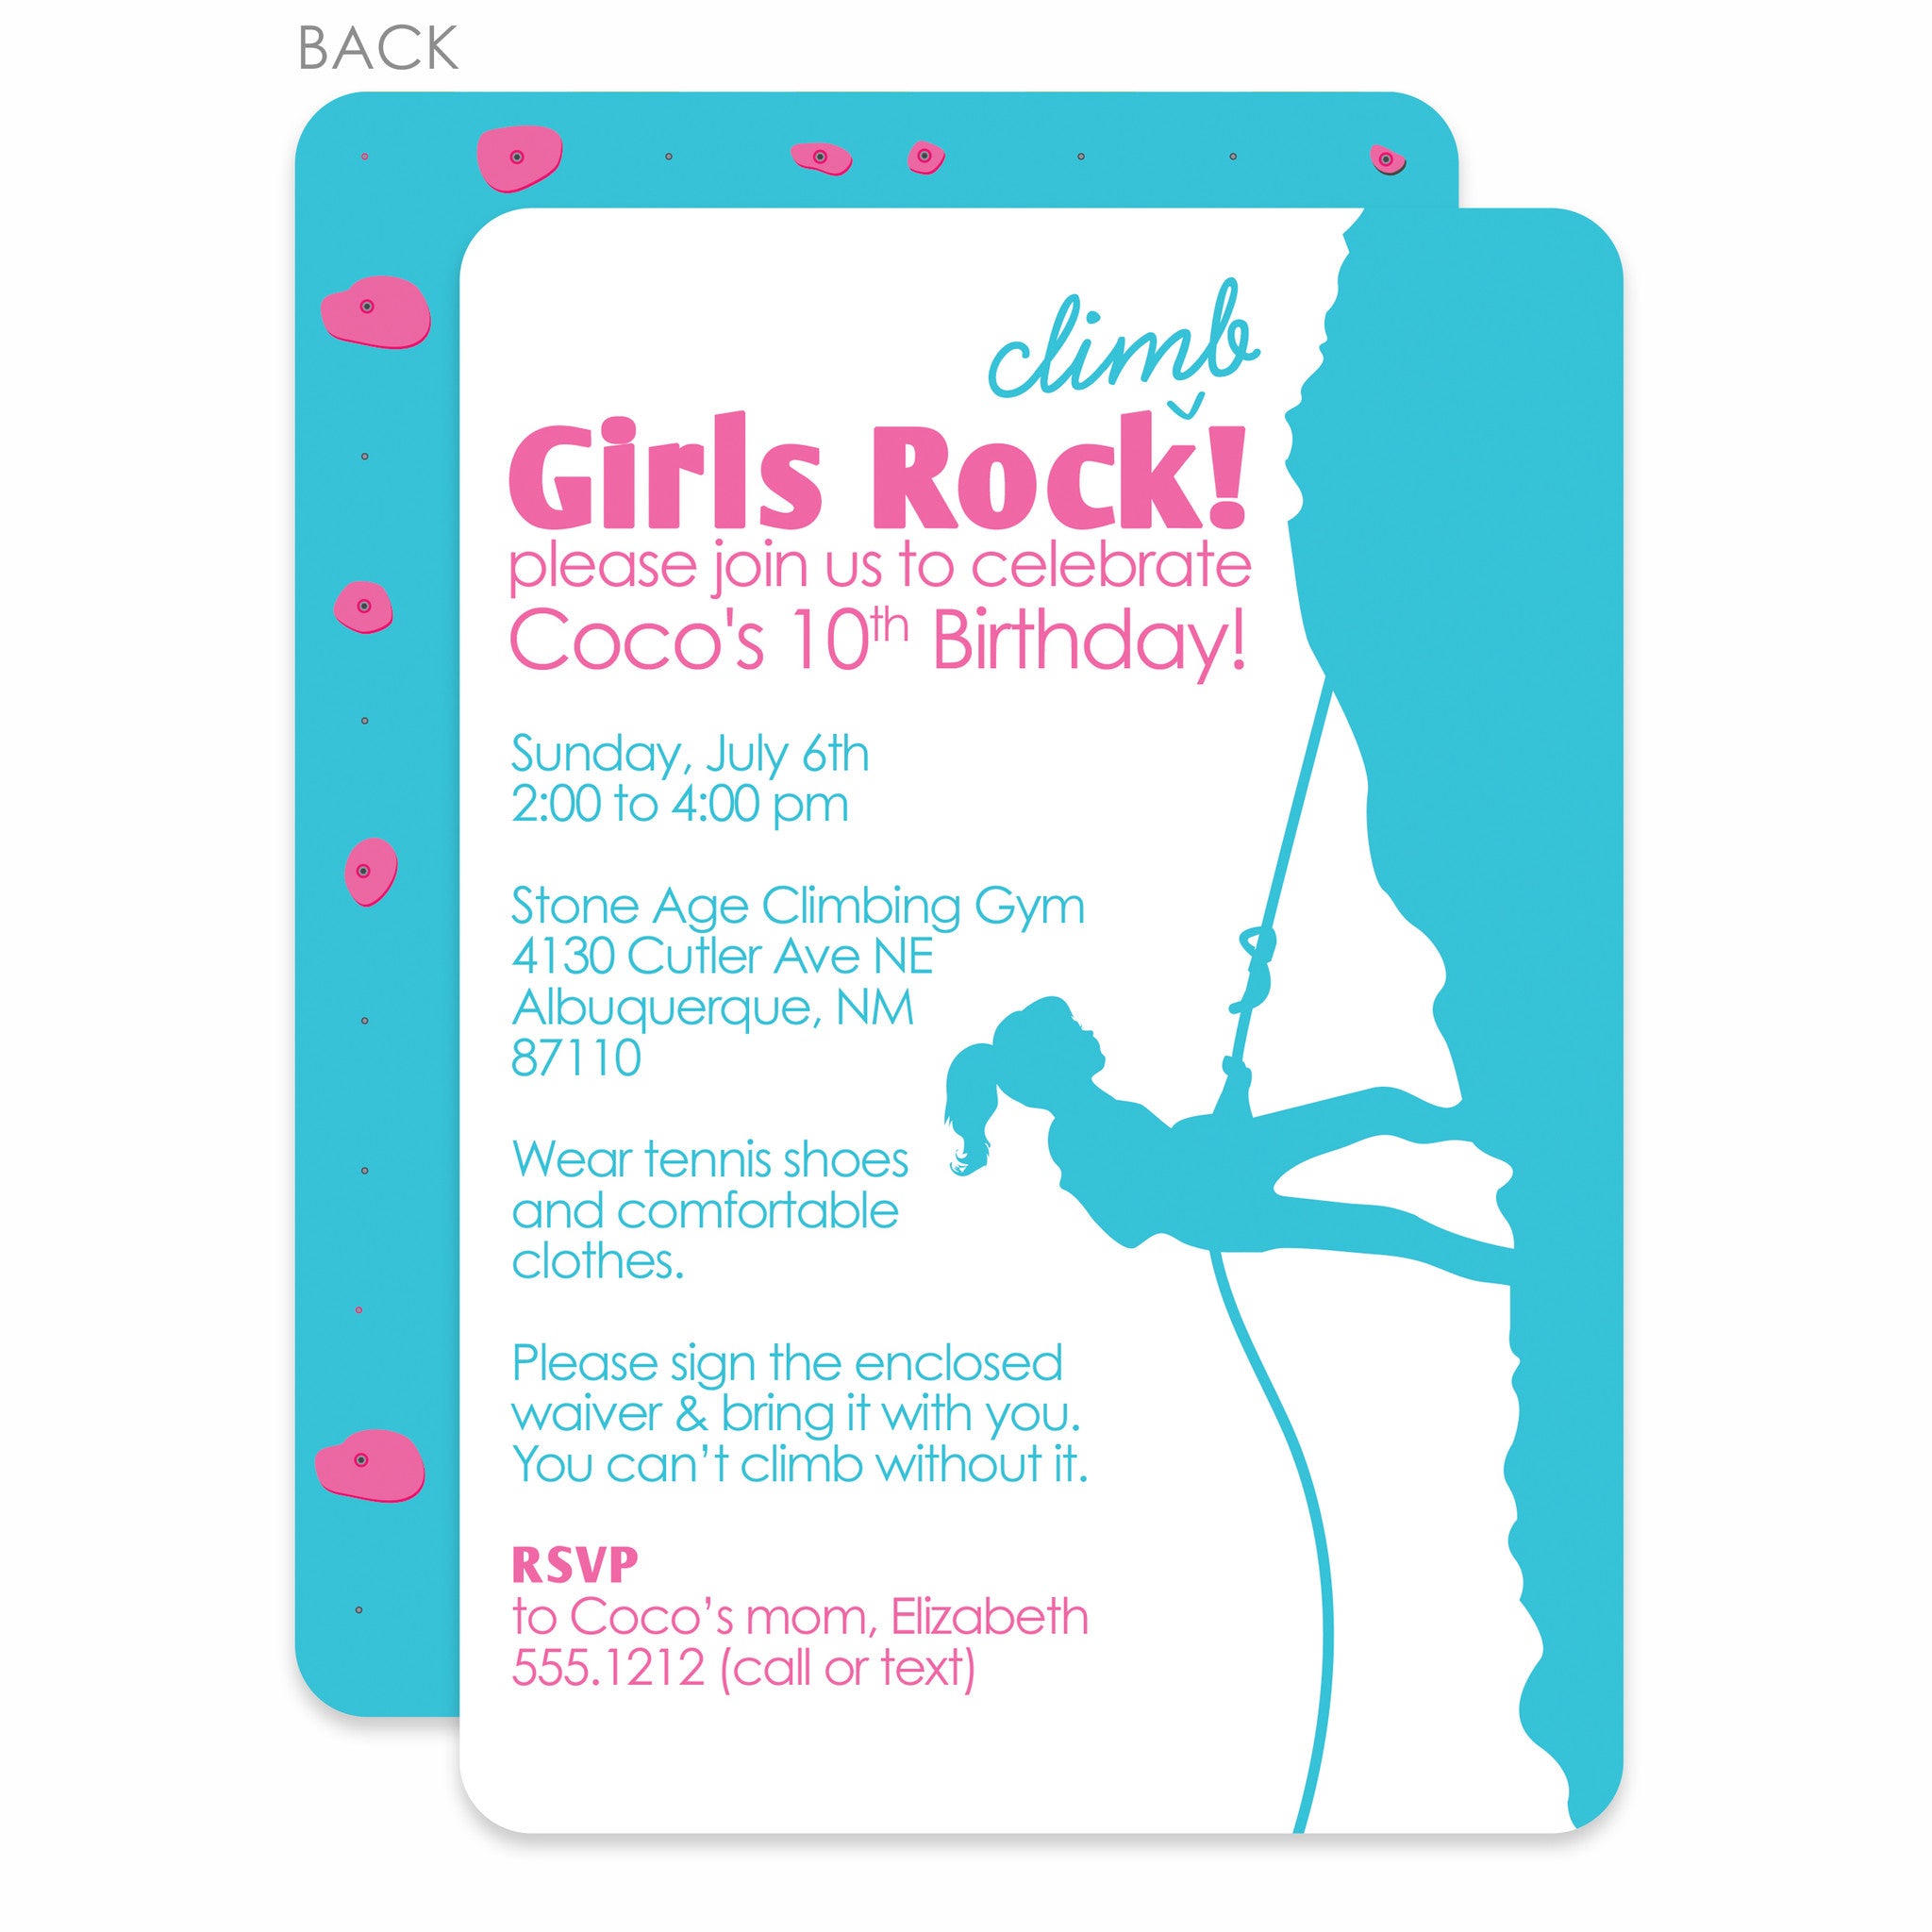 rock-climbing-girl-birthday-invitation-printed-pipsy